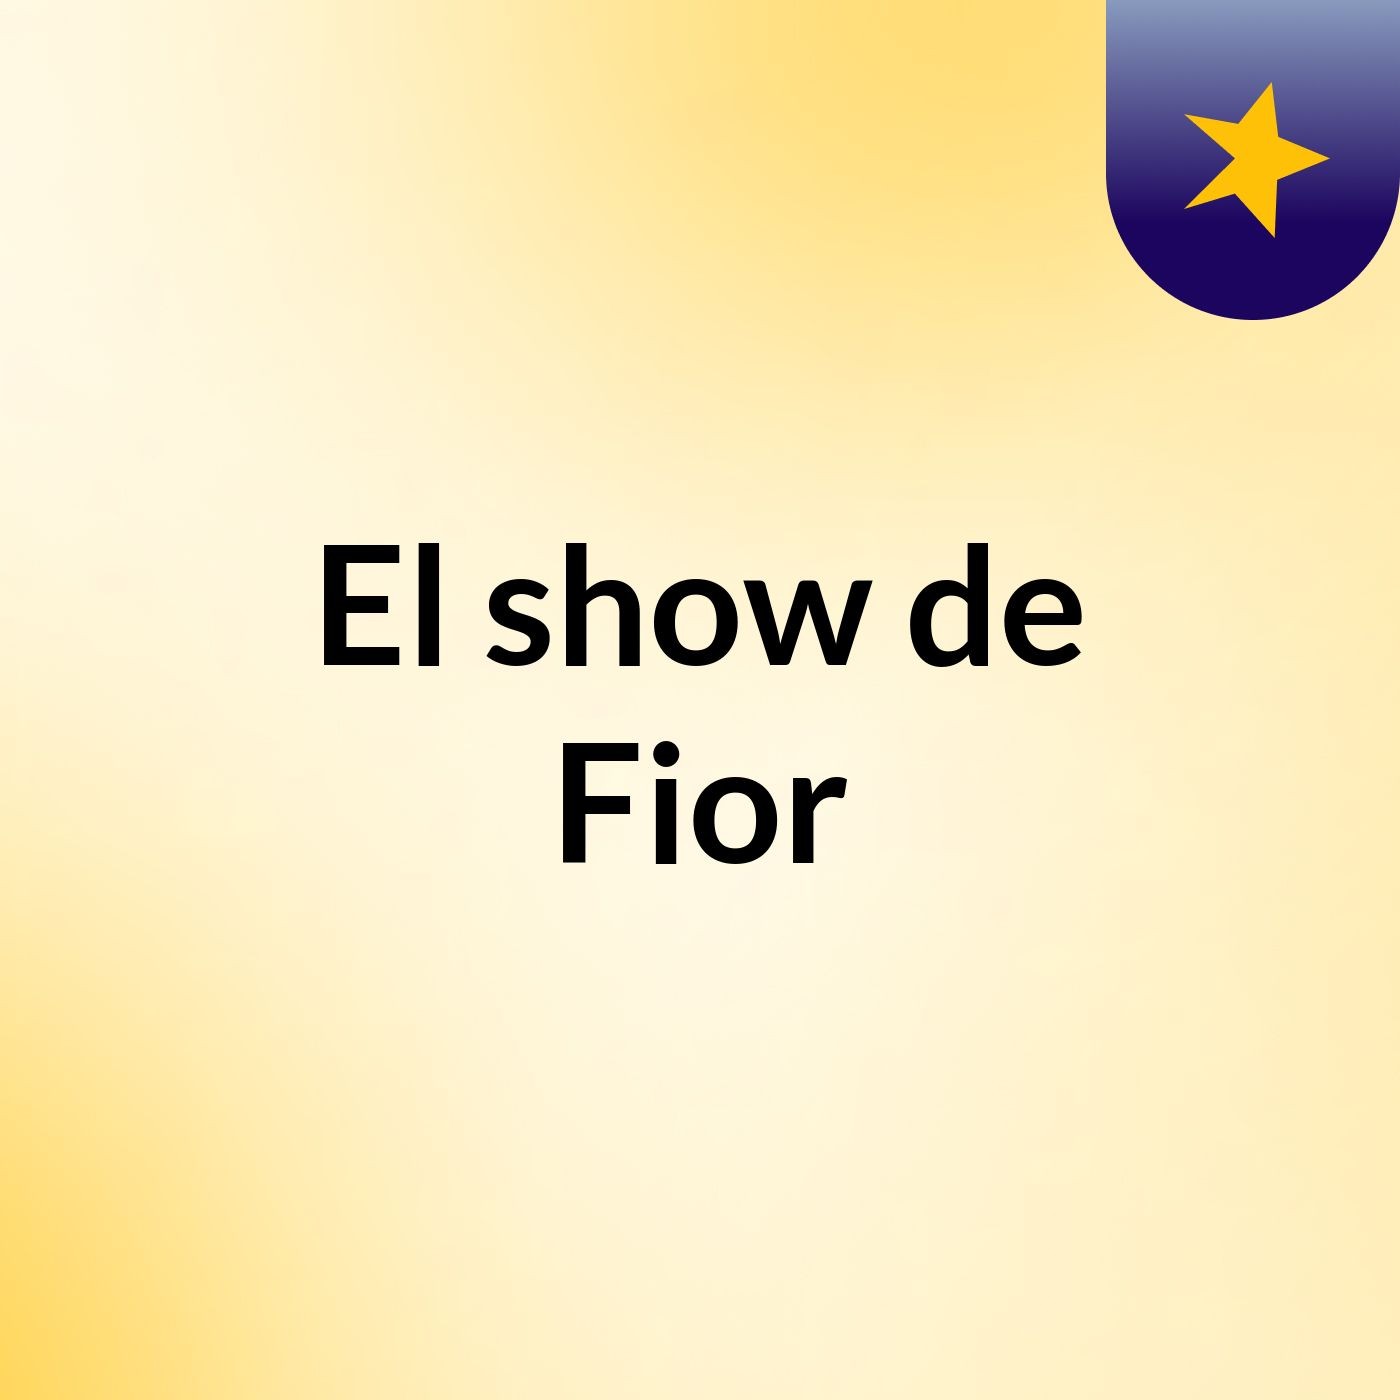 El show de Fior